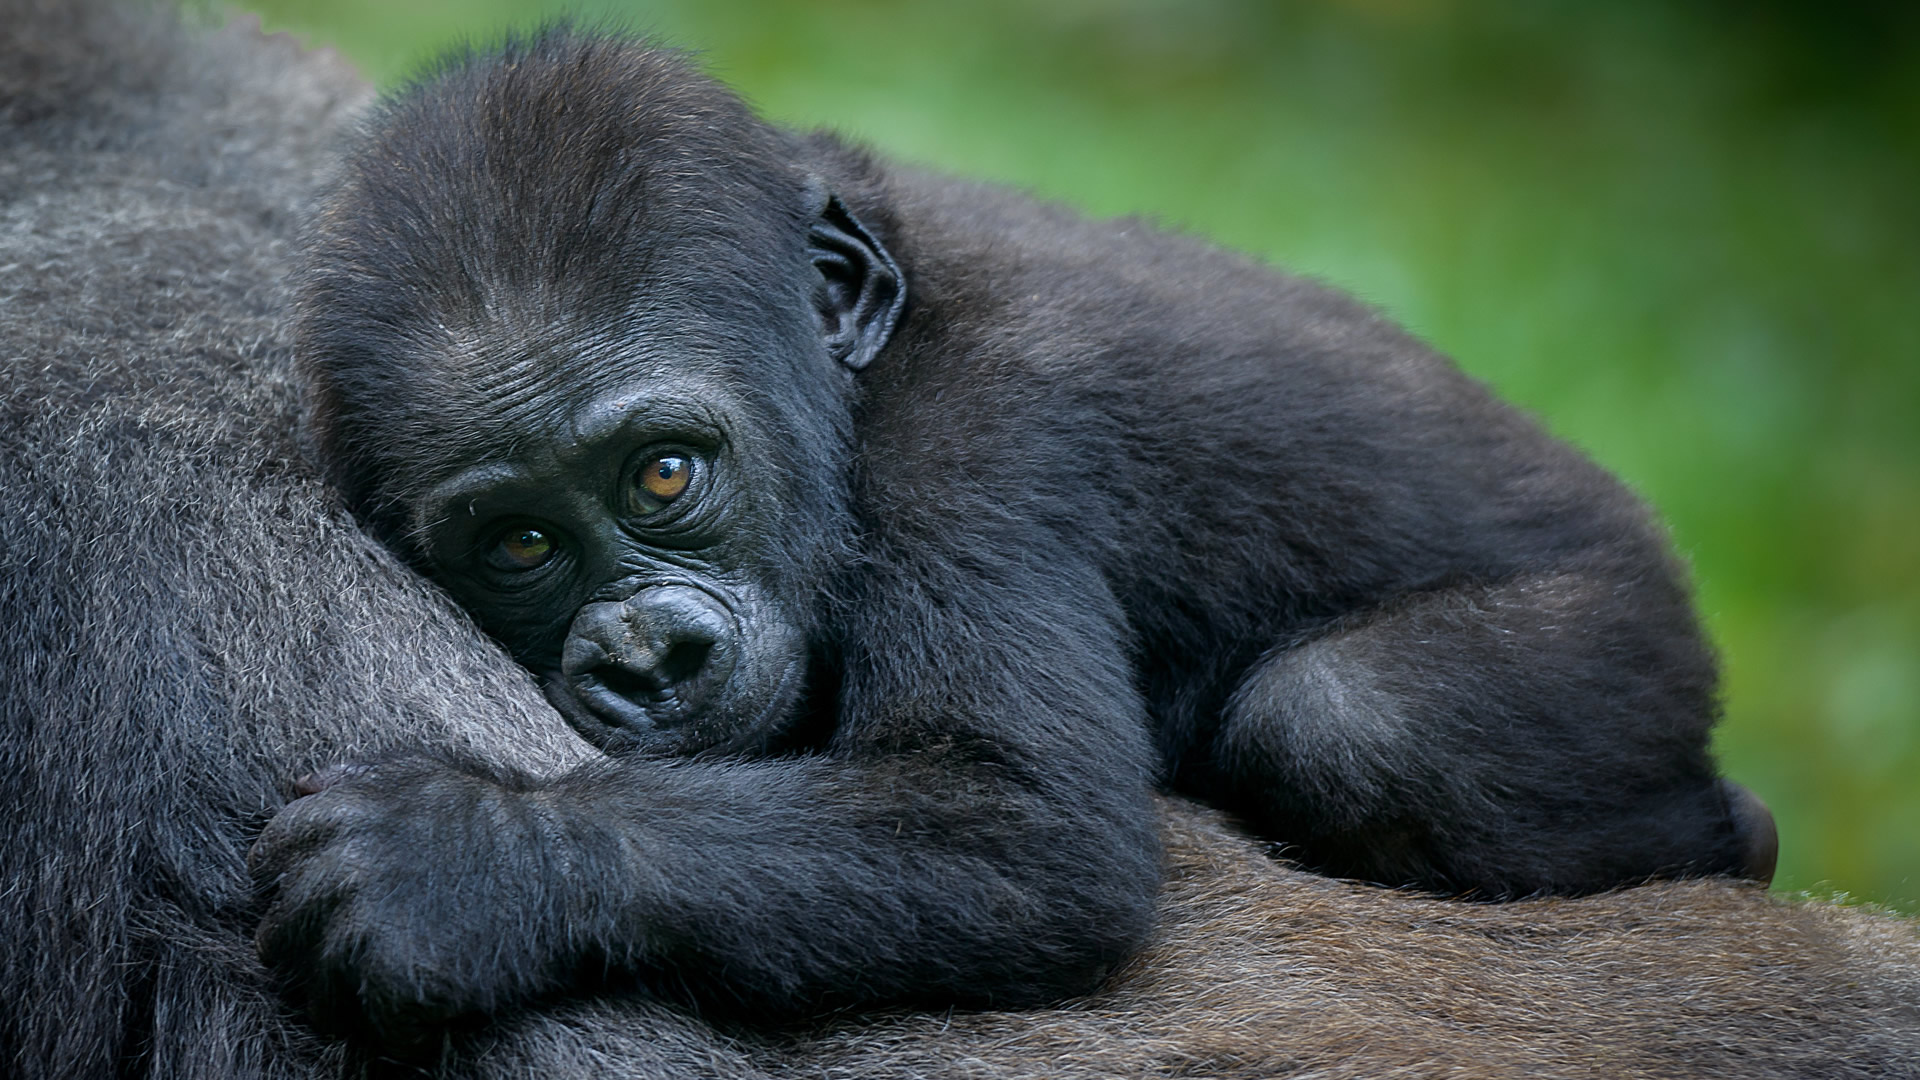 rwanda gorilla trekking and road safaris